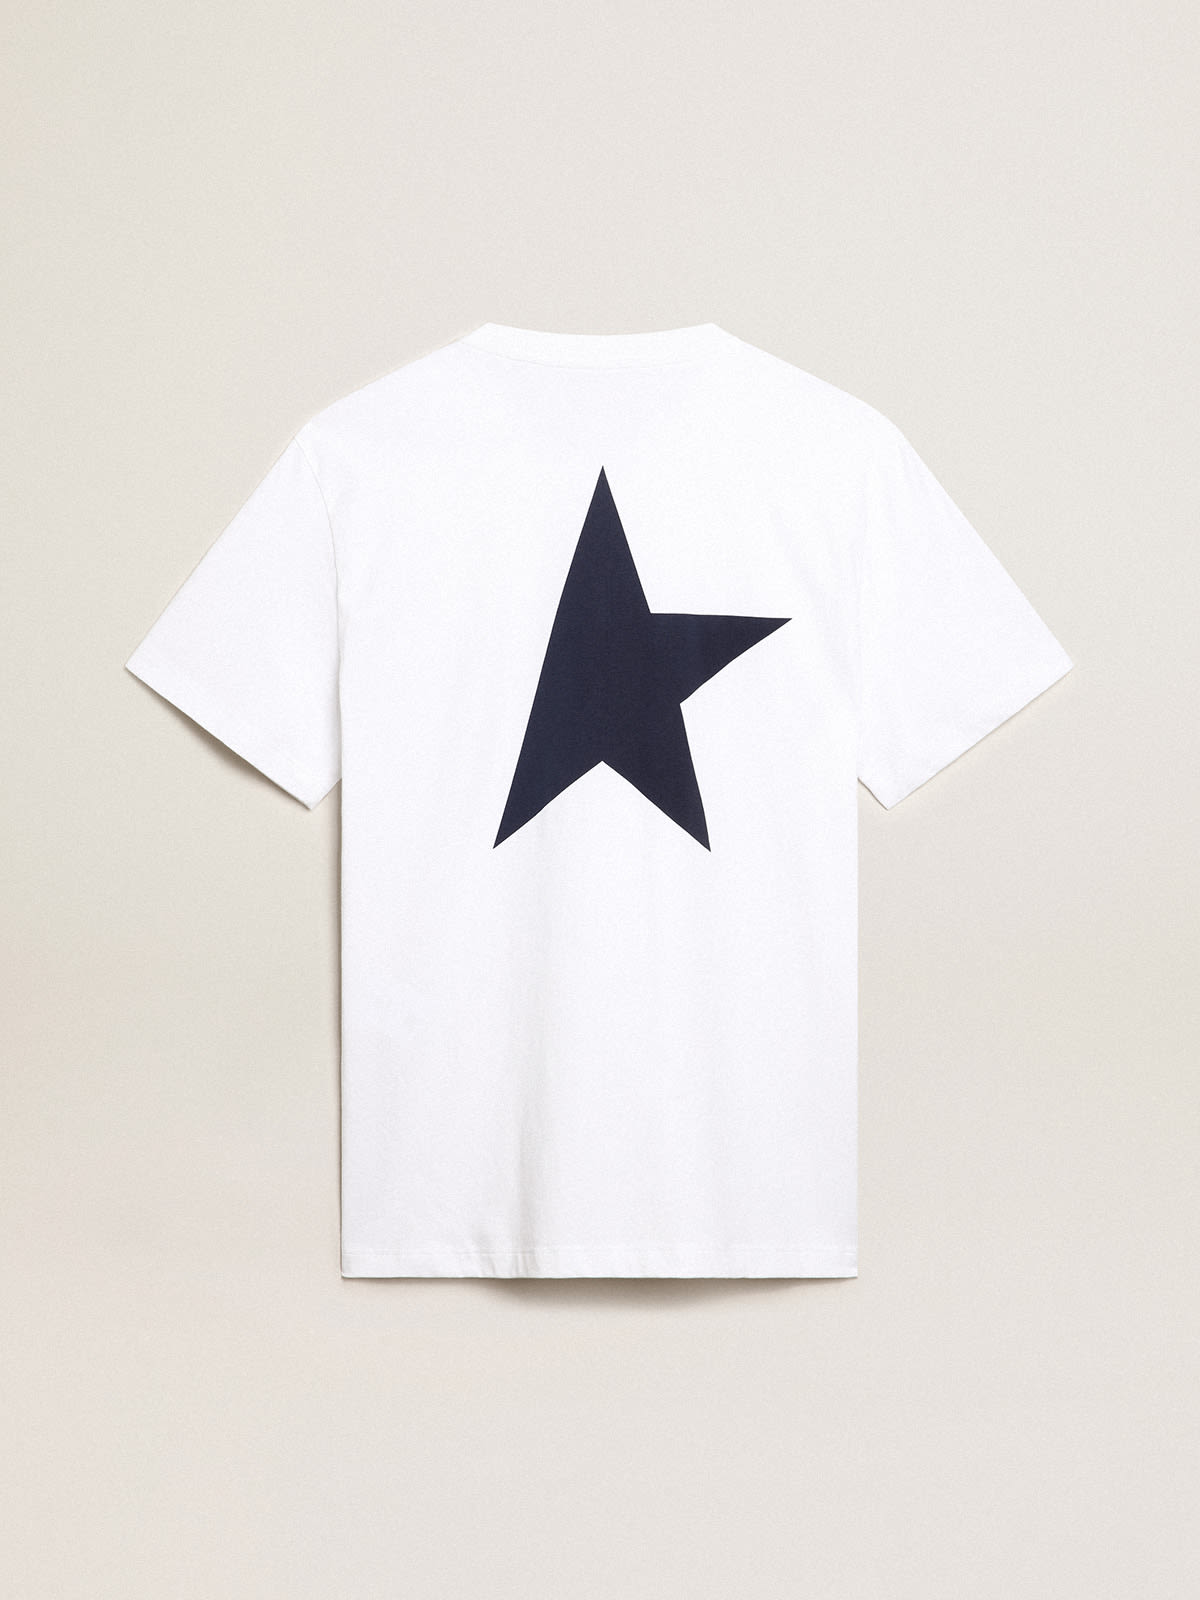 Golden Goose - Men’s white T-shirt with dark blue star on the back in 